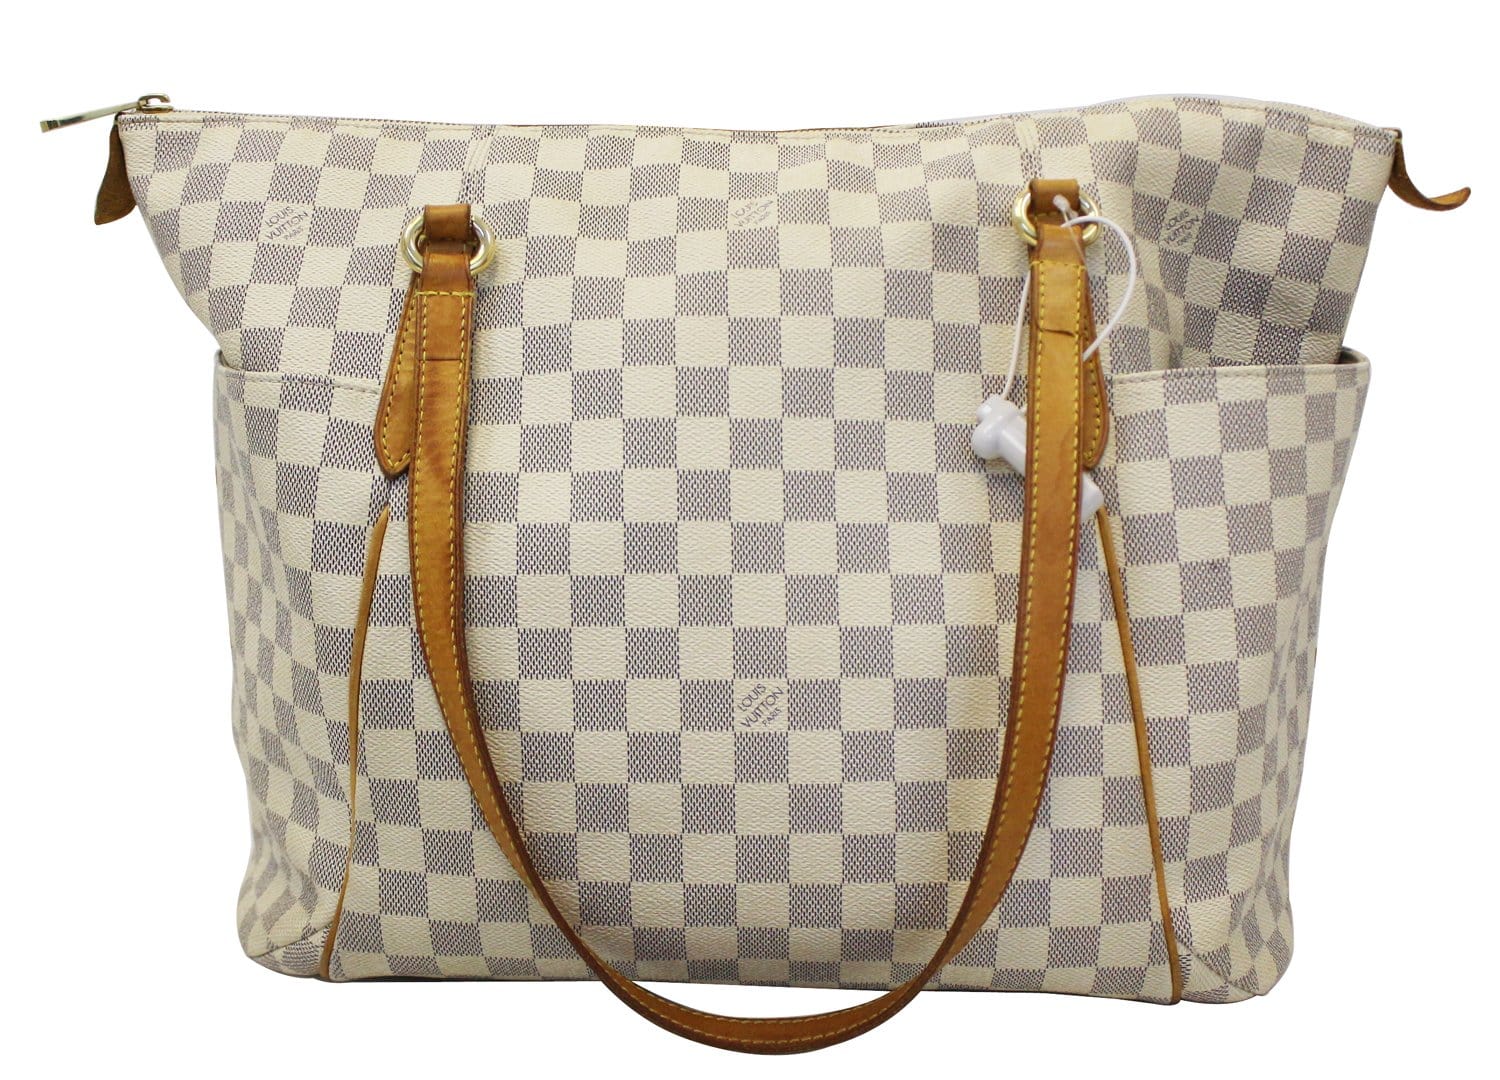 Totally GM Damier Azur – Keeks Designer Handbags